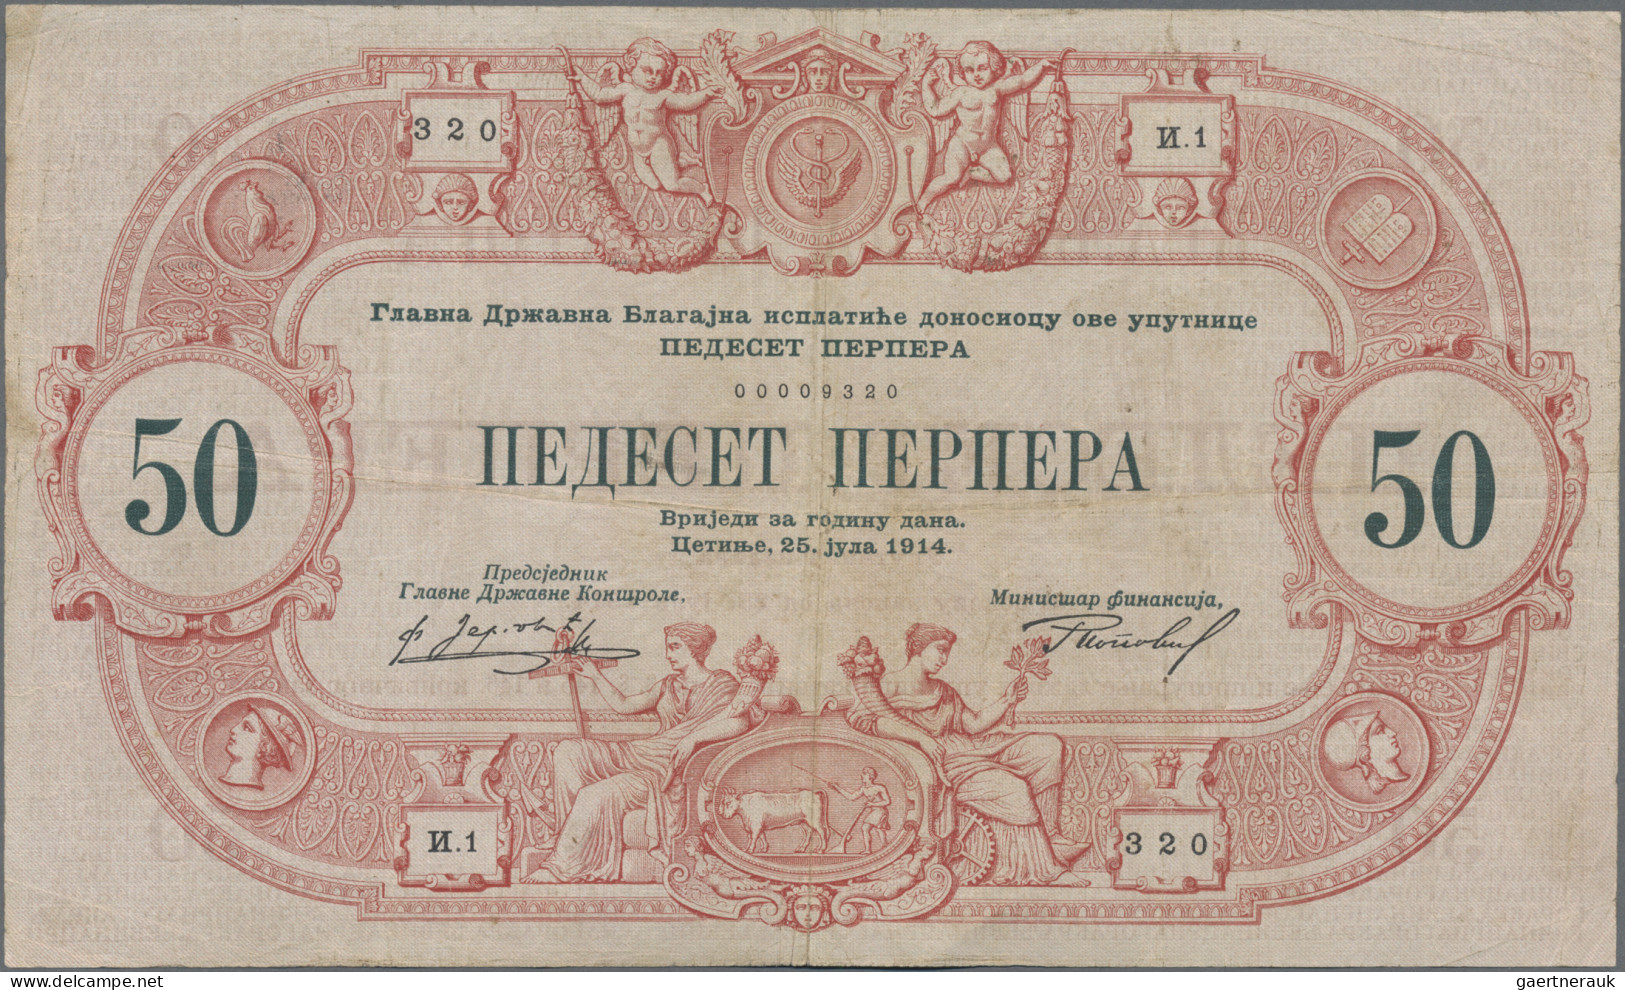 Montenegro: Kingdom of Montenegro – Royal Government, set with 10 Perpera 1914 (